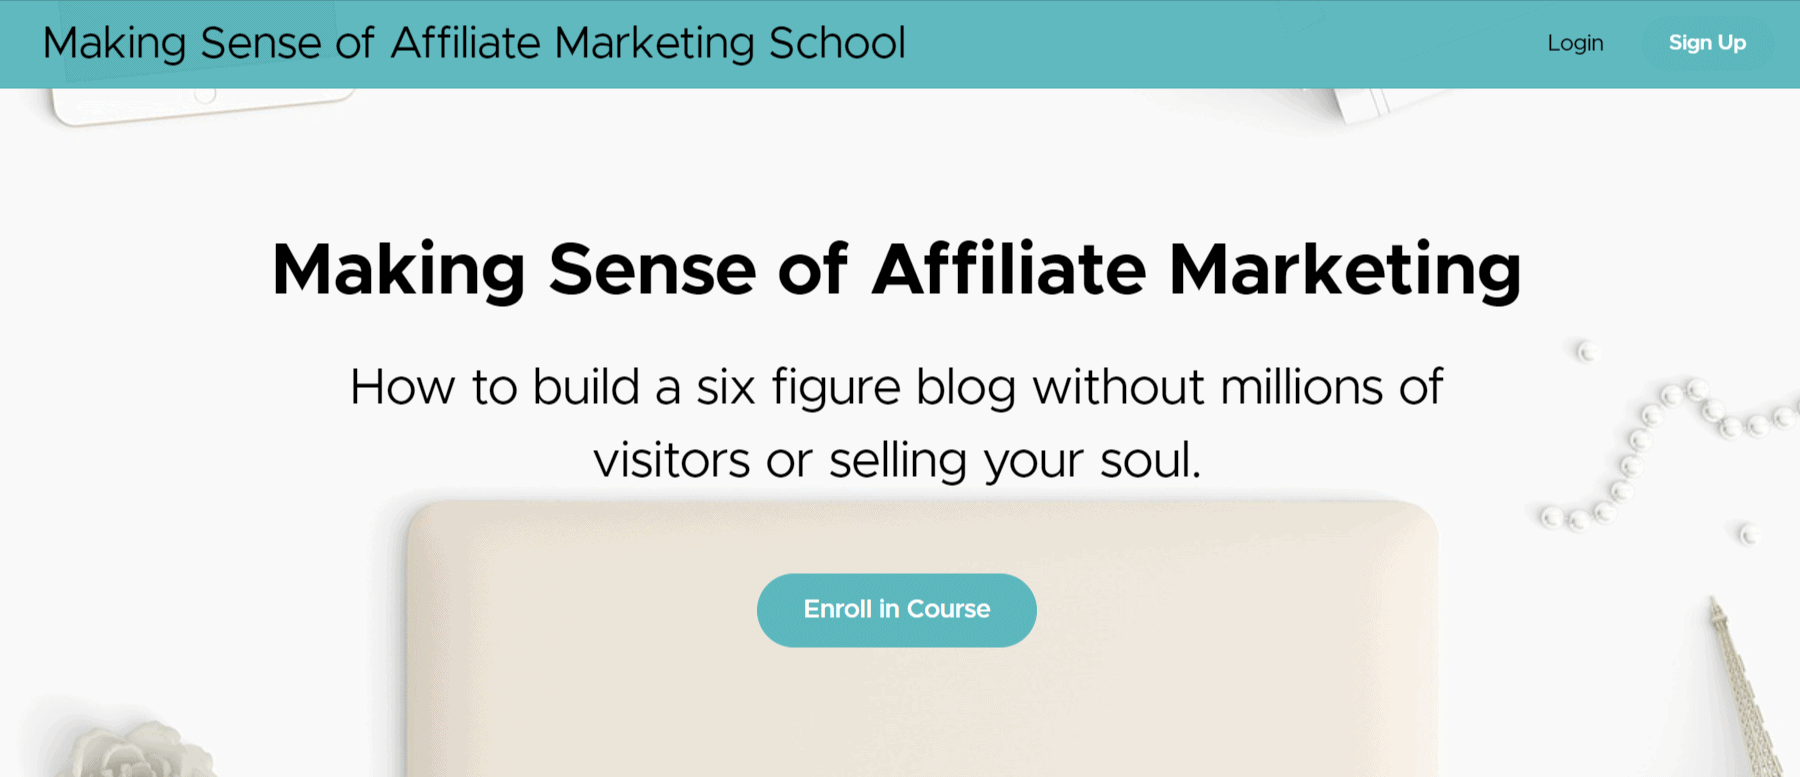 Making Sense of Affiliate Marketing Course